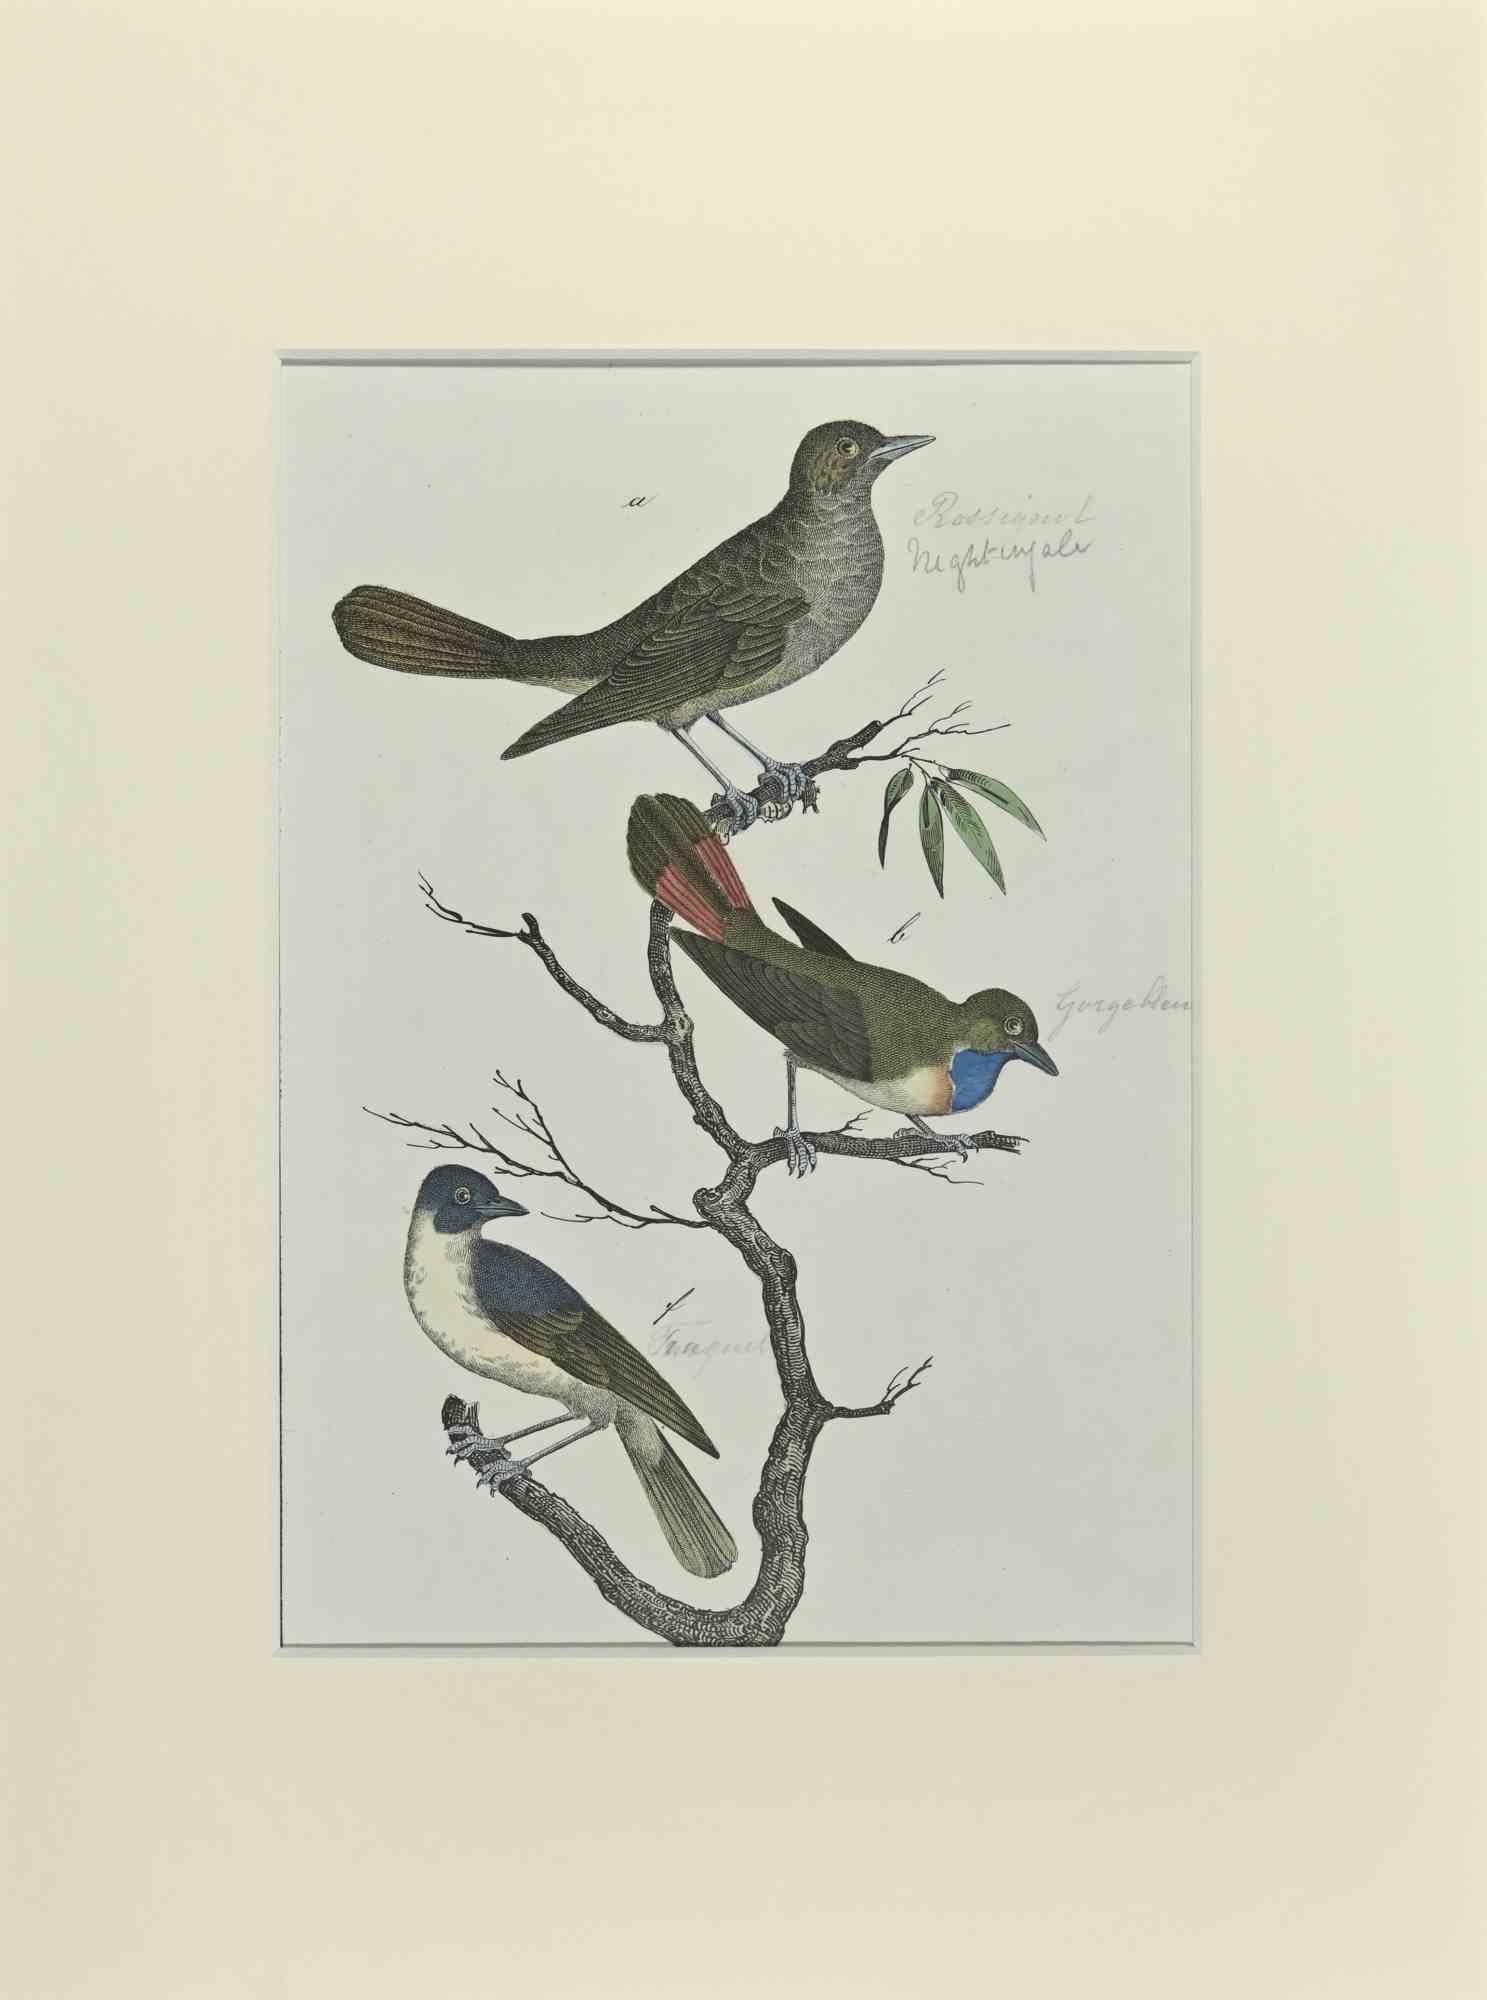 Nightingale - Etching by Johann Friedrich Naumann - 1840